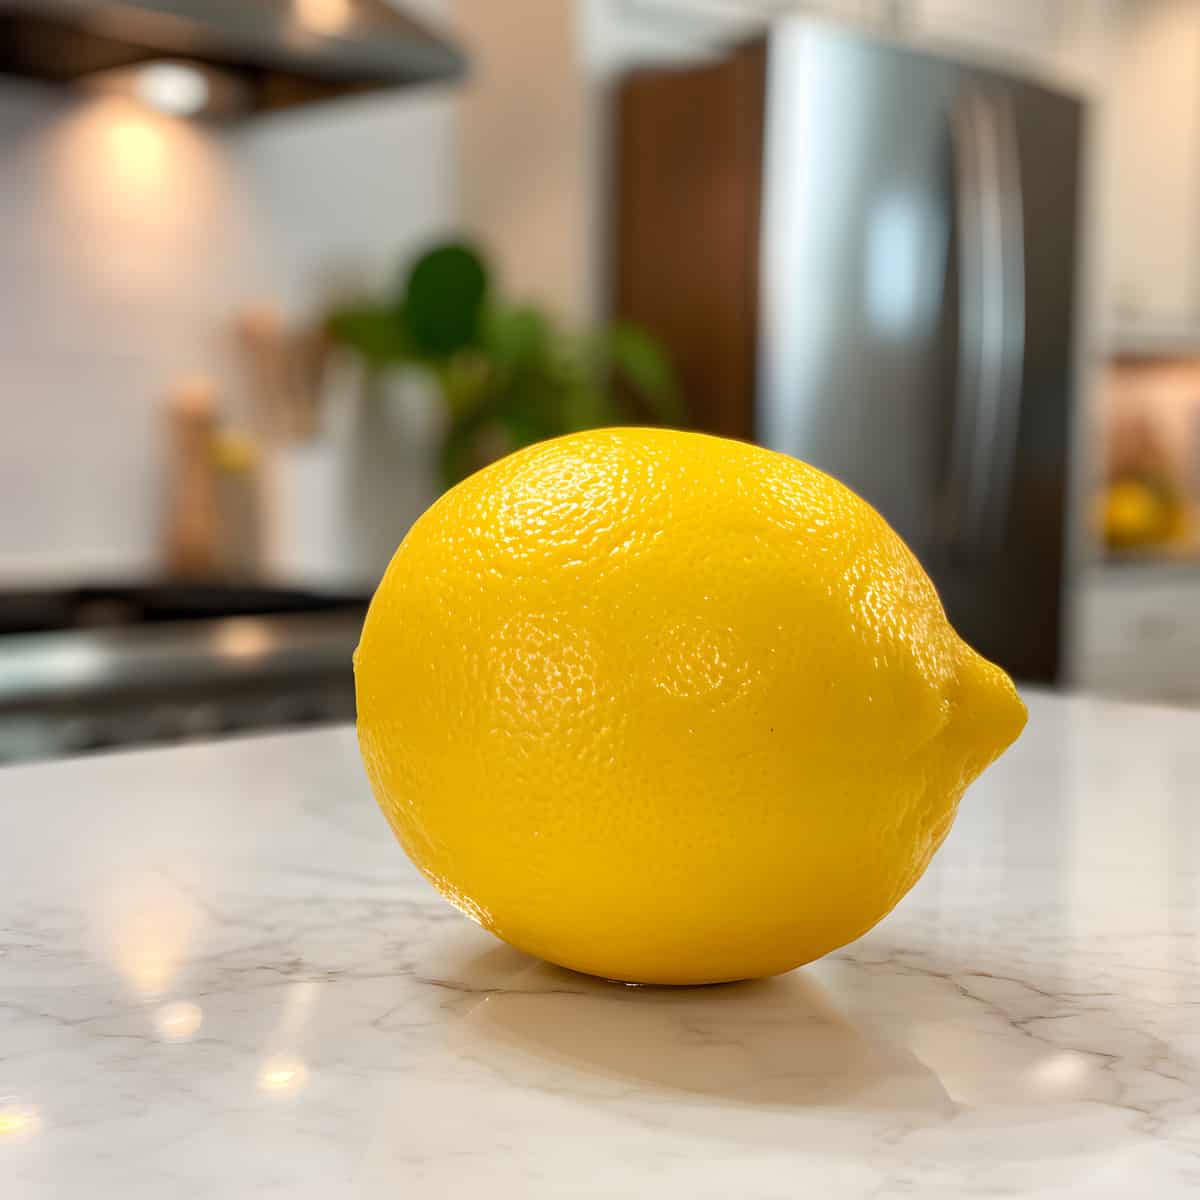 Ponderosa Lemon on a kitchen counter